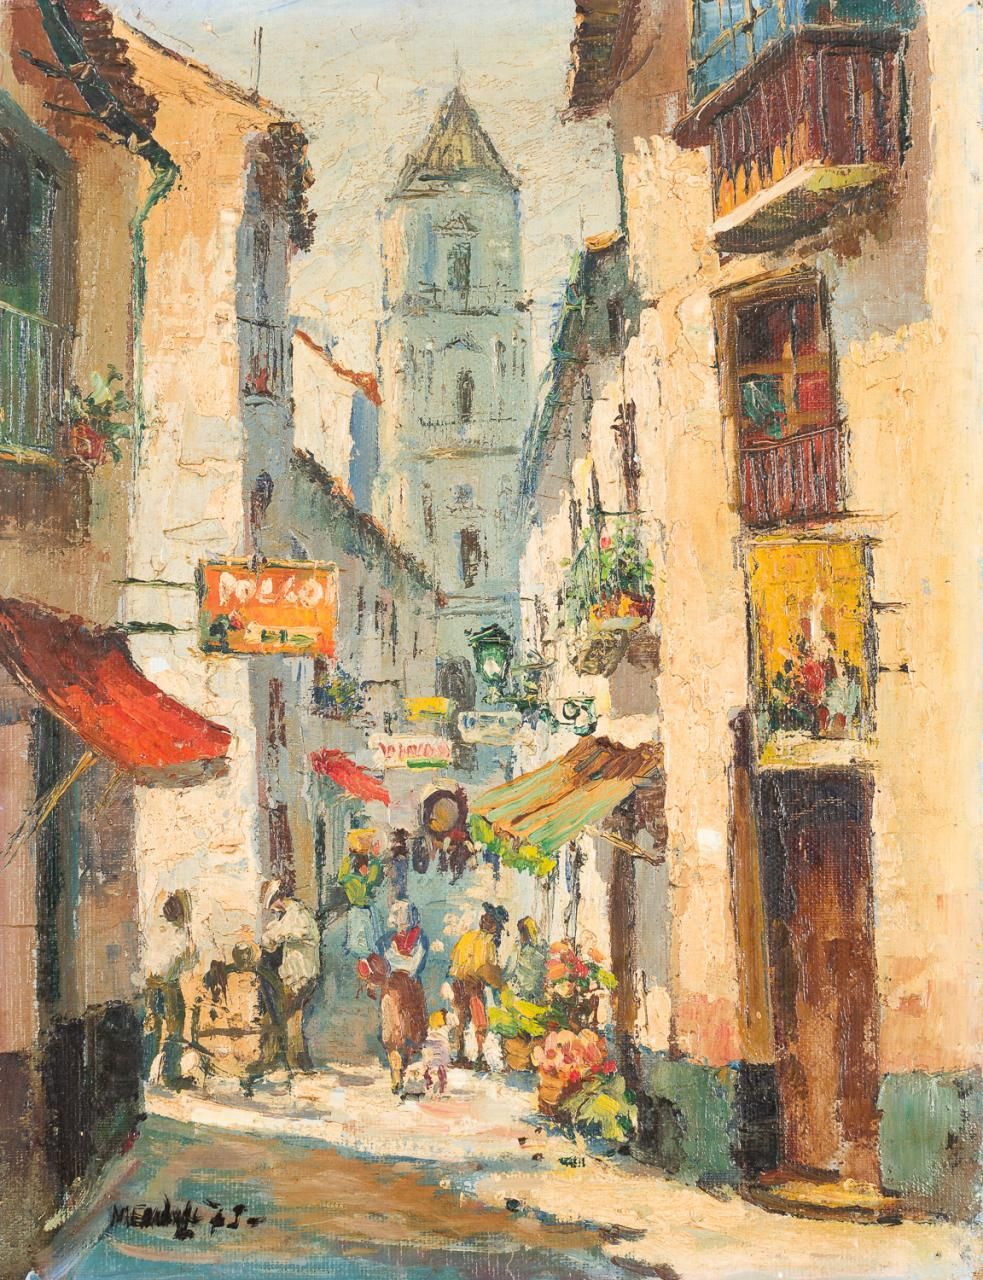 ESCUELA ANDALUZA, S. XX San Juan Street
Oil on canvas
35 x 27 cm
Signed